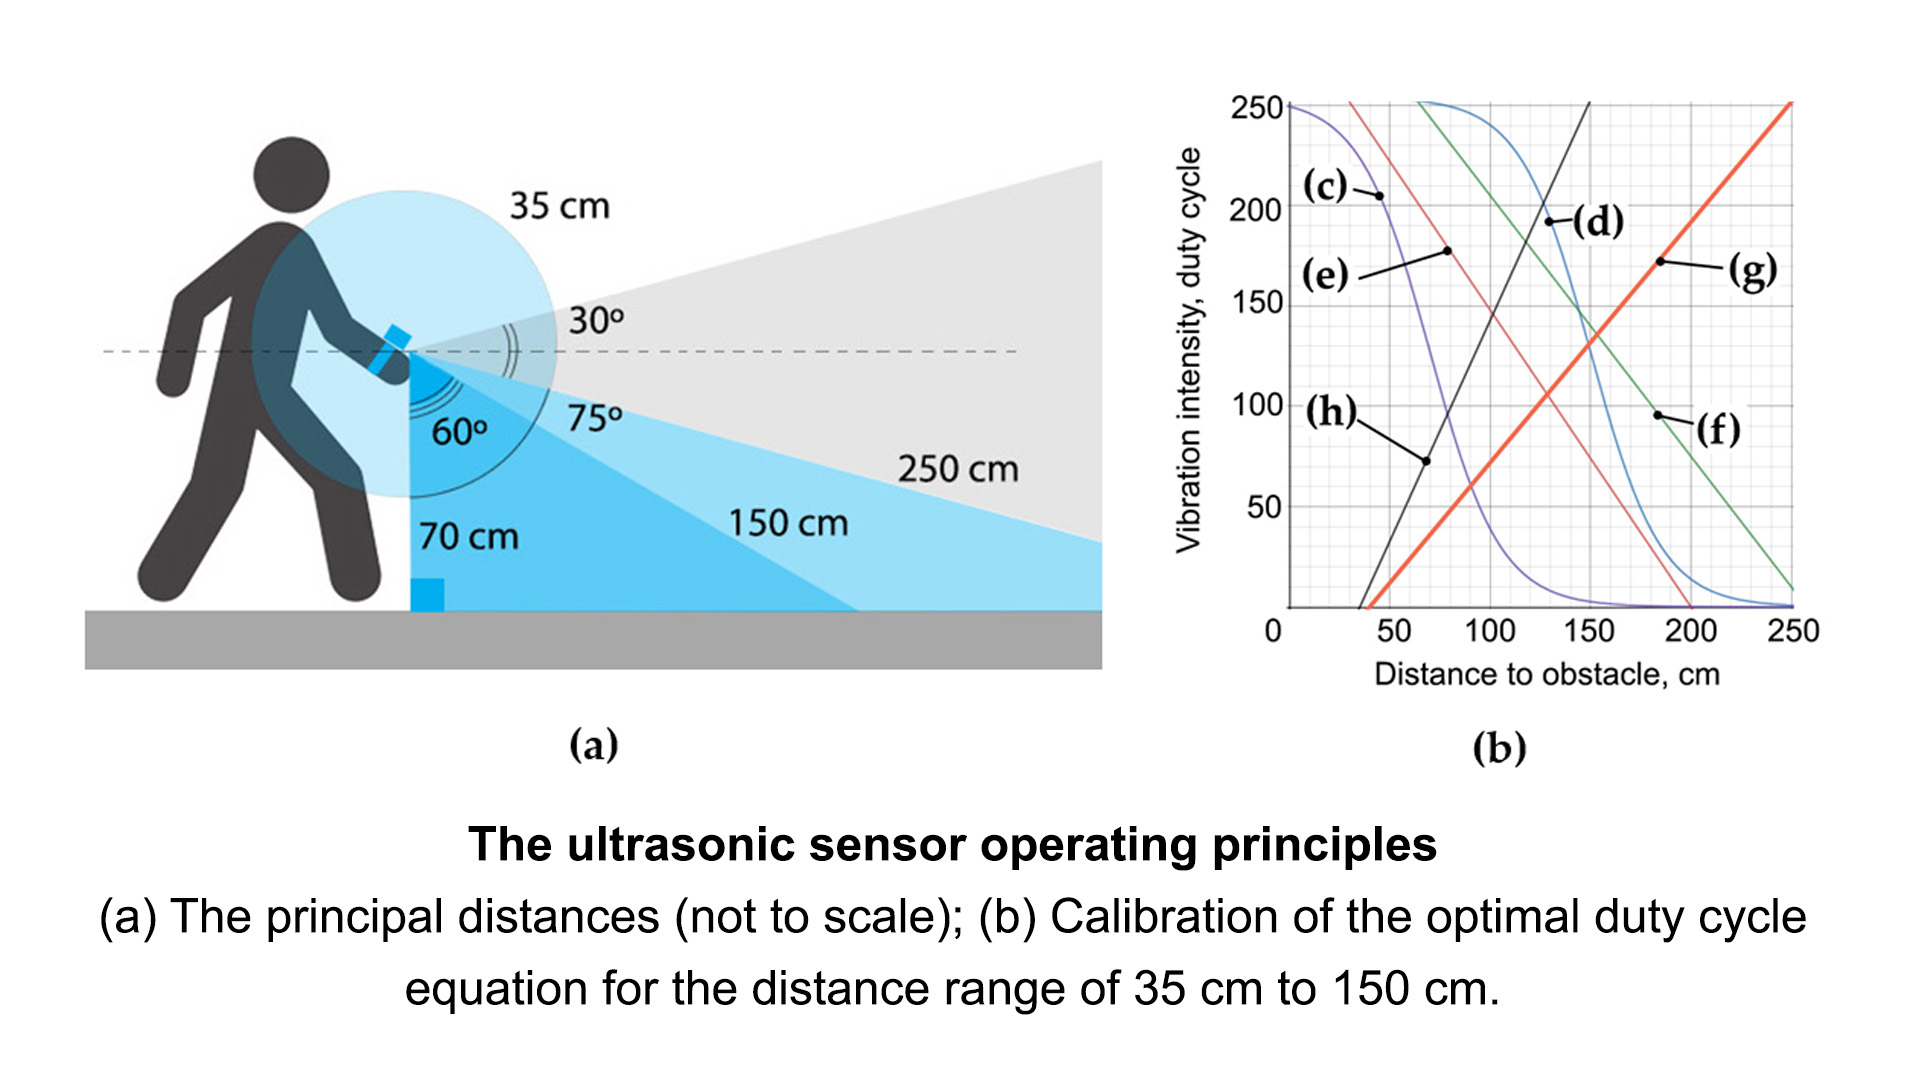 The ultrasonic sensor operating principles